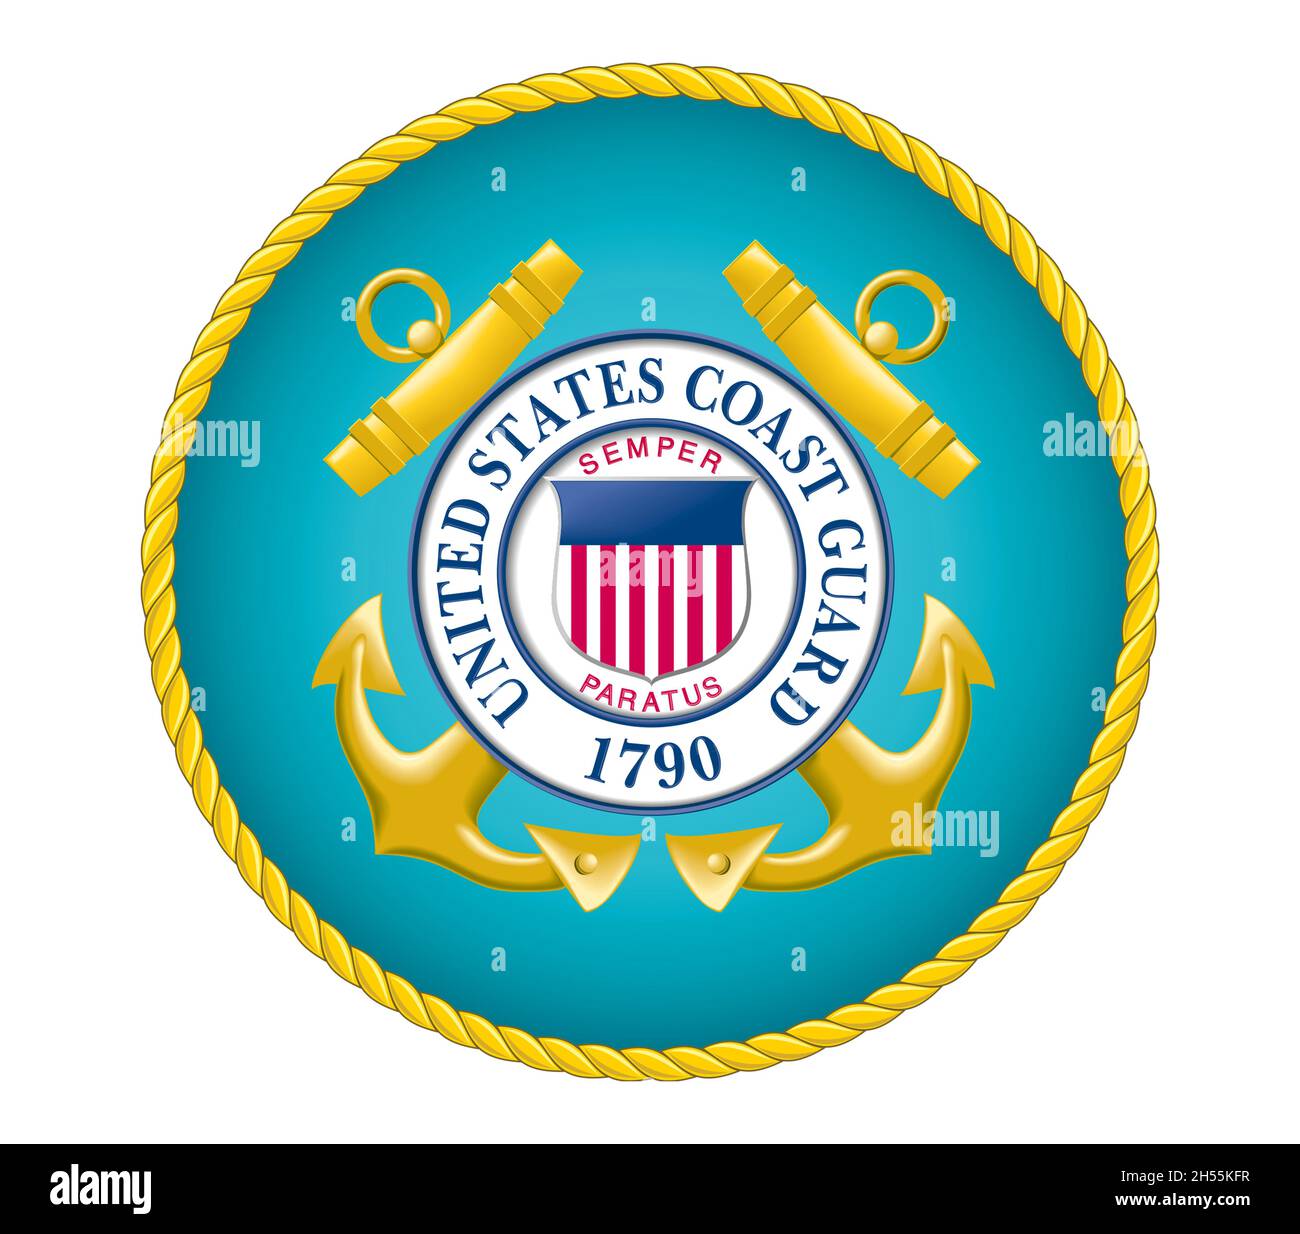 United States Coast Guard USCG Stock Photo